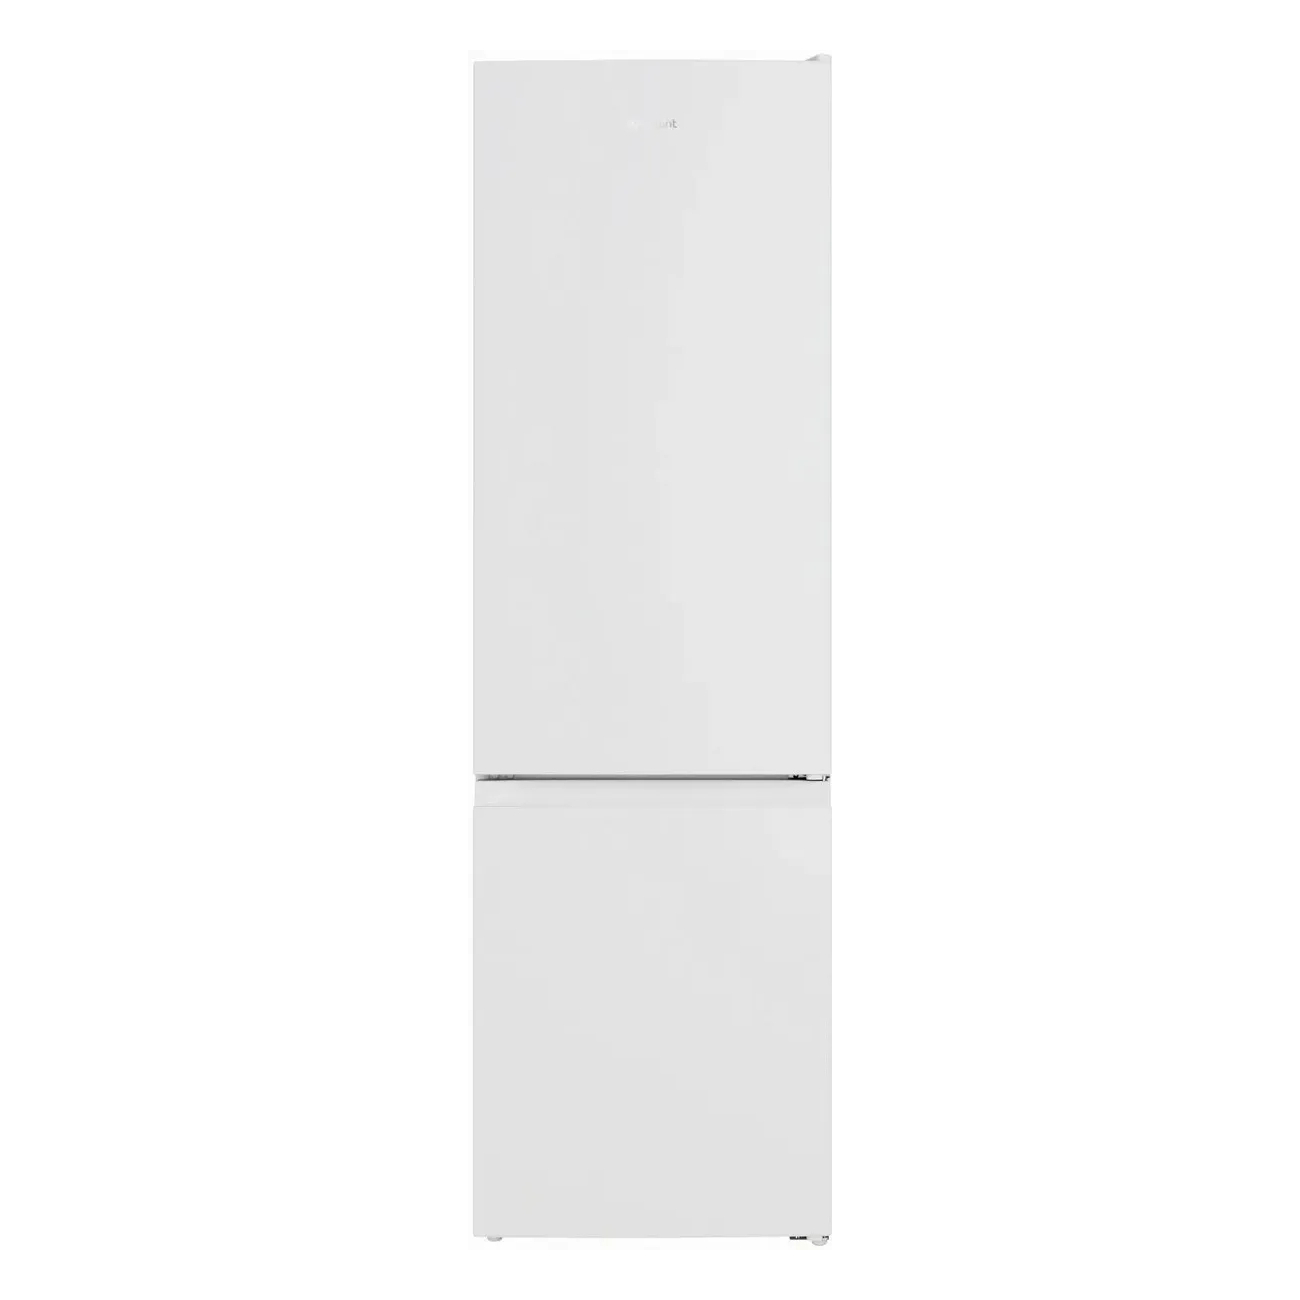 Холодильник HotPoint HT 4200 W белый двухкамерный холодильник hotpoint ht 4200 ab мраморный